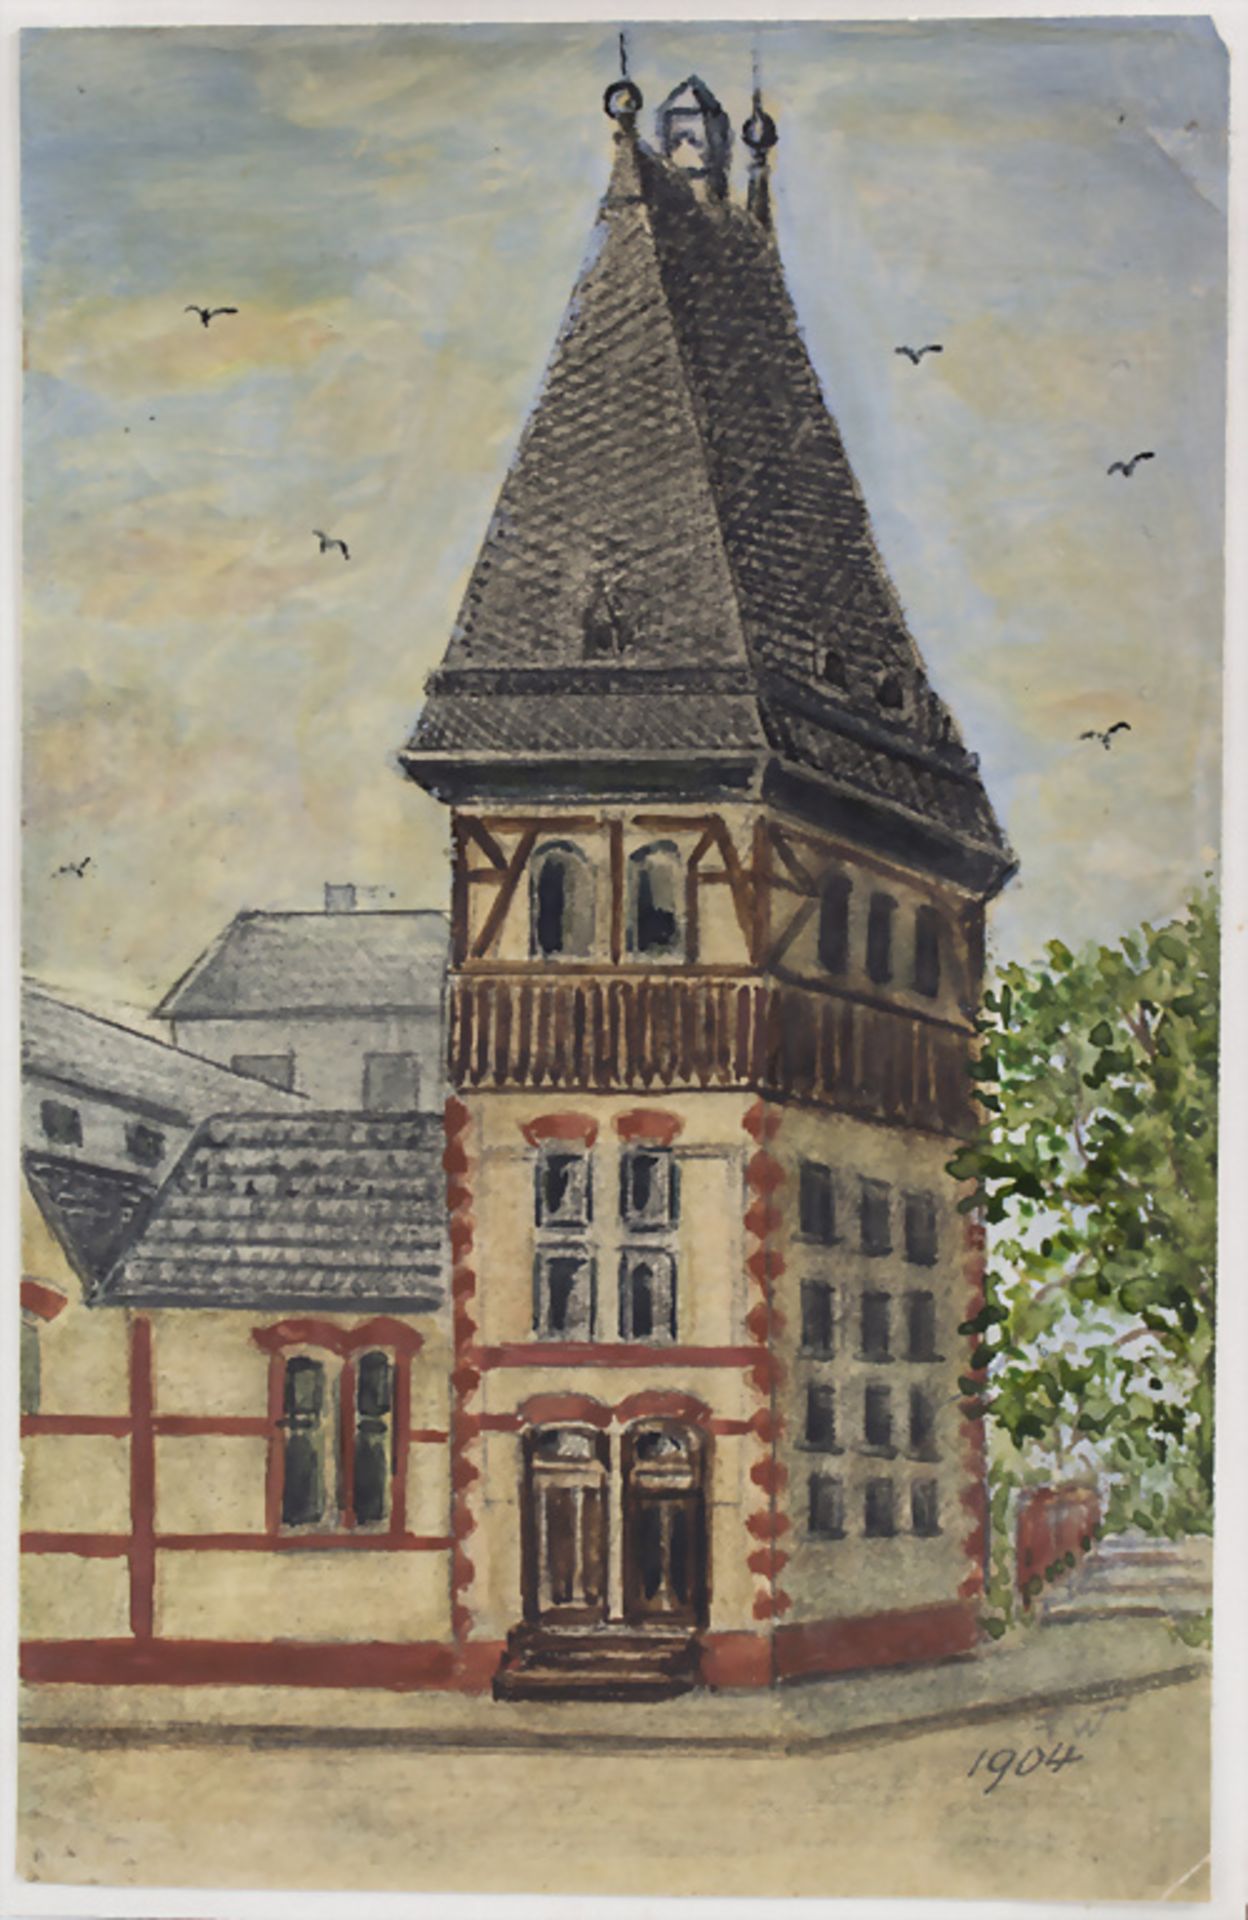 F.W. Schulz (tätig um 1904), 'Turm' und 'Lilie' - Bild 2 aus 4